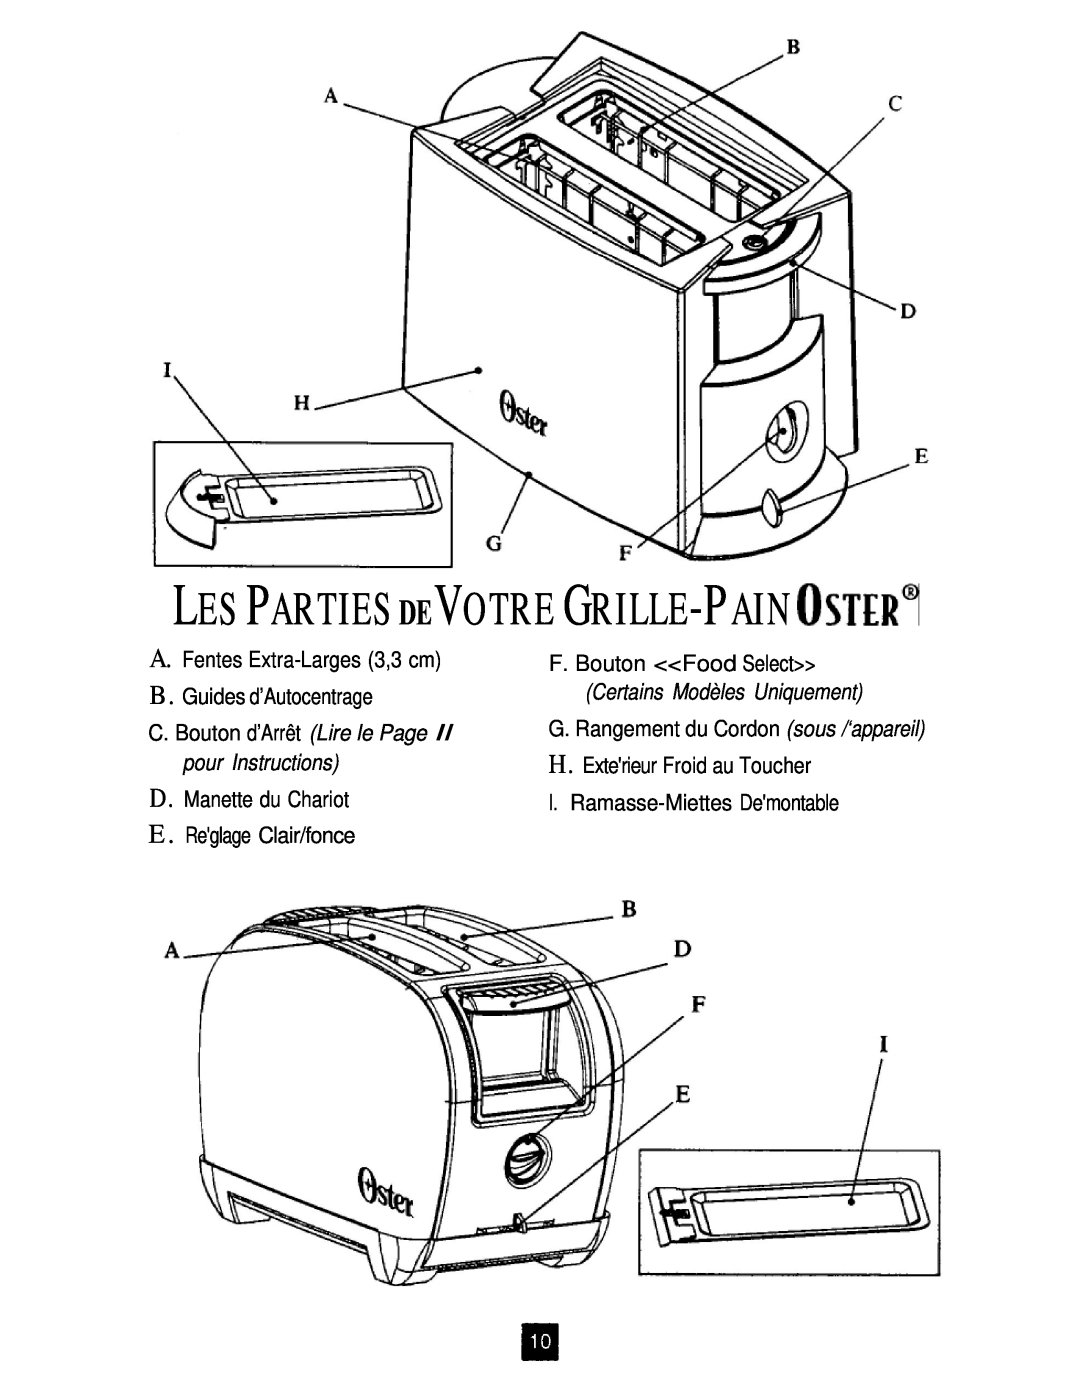 Oster TOASTERS instruction manual Les Partiesdevotre Grille-Pain, A. Fentes Extra-Larges 3,3 cm B. Guides d’Autocentrage 